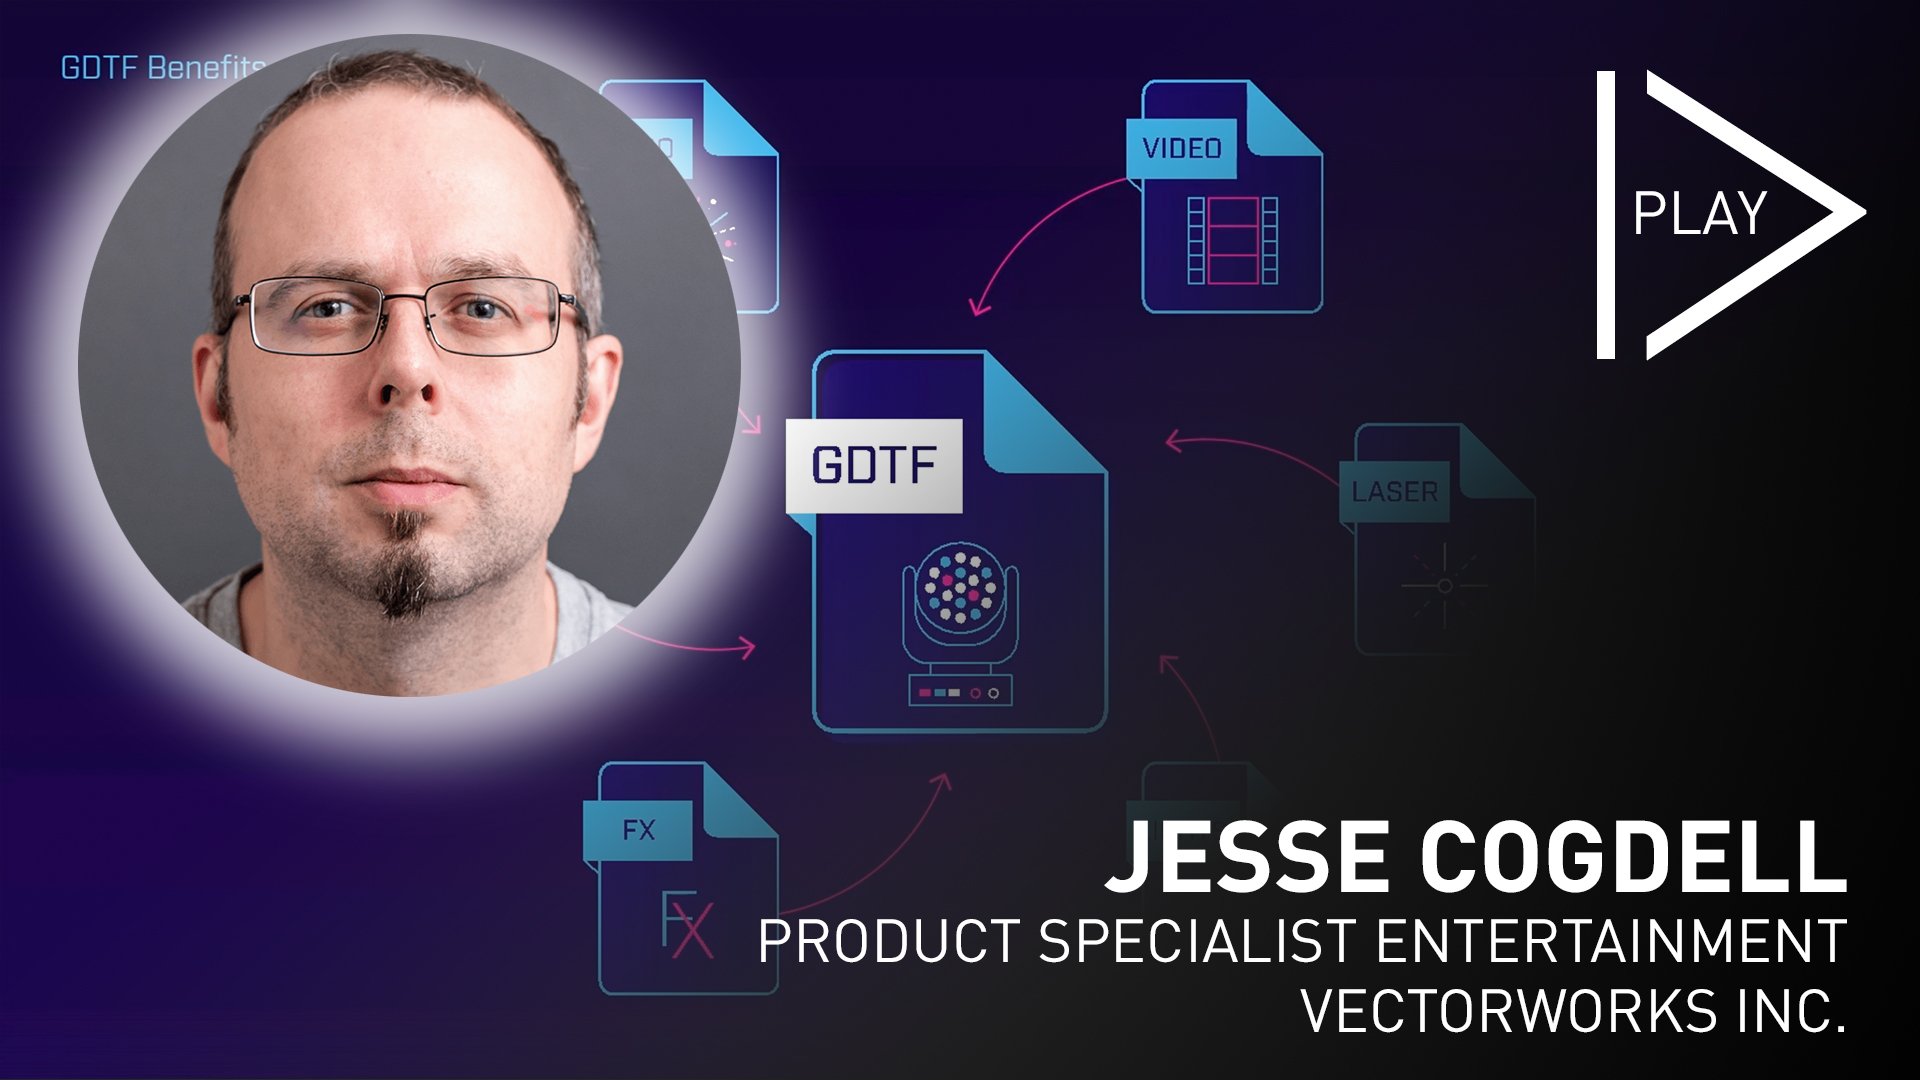 Jesse_Cogdell-Vectorworks_INC-Prolight + Sound-GDTF-Vectorworks-Spotlight-2020